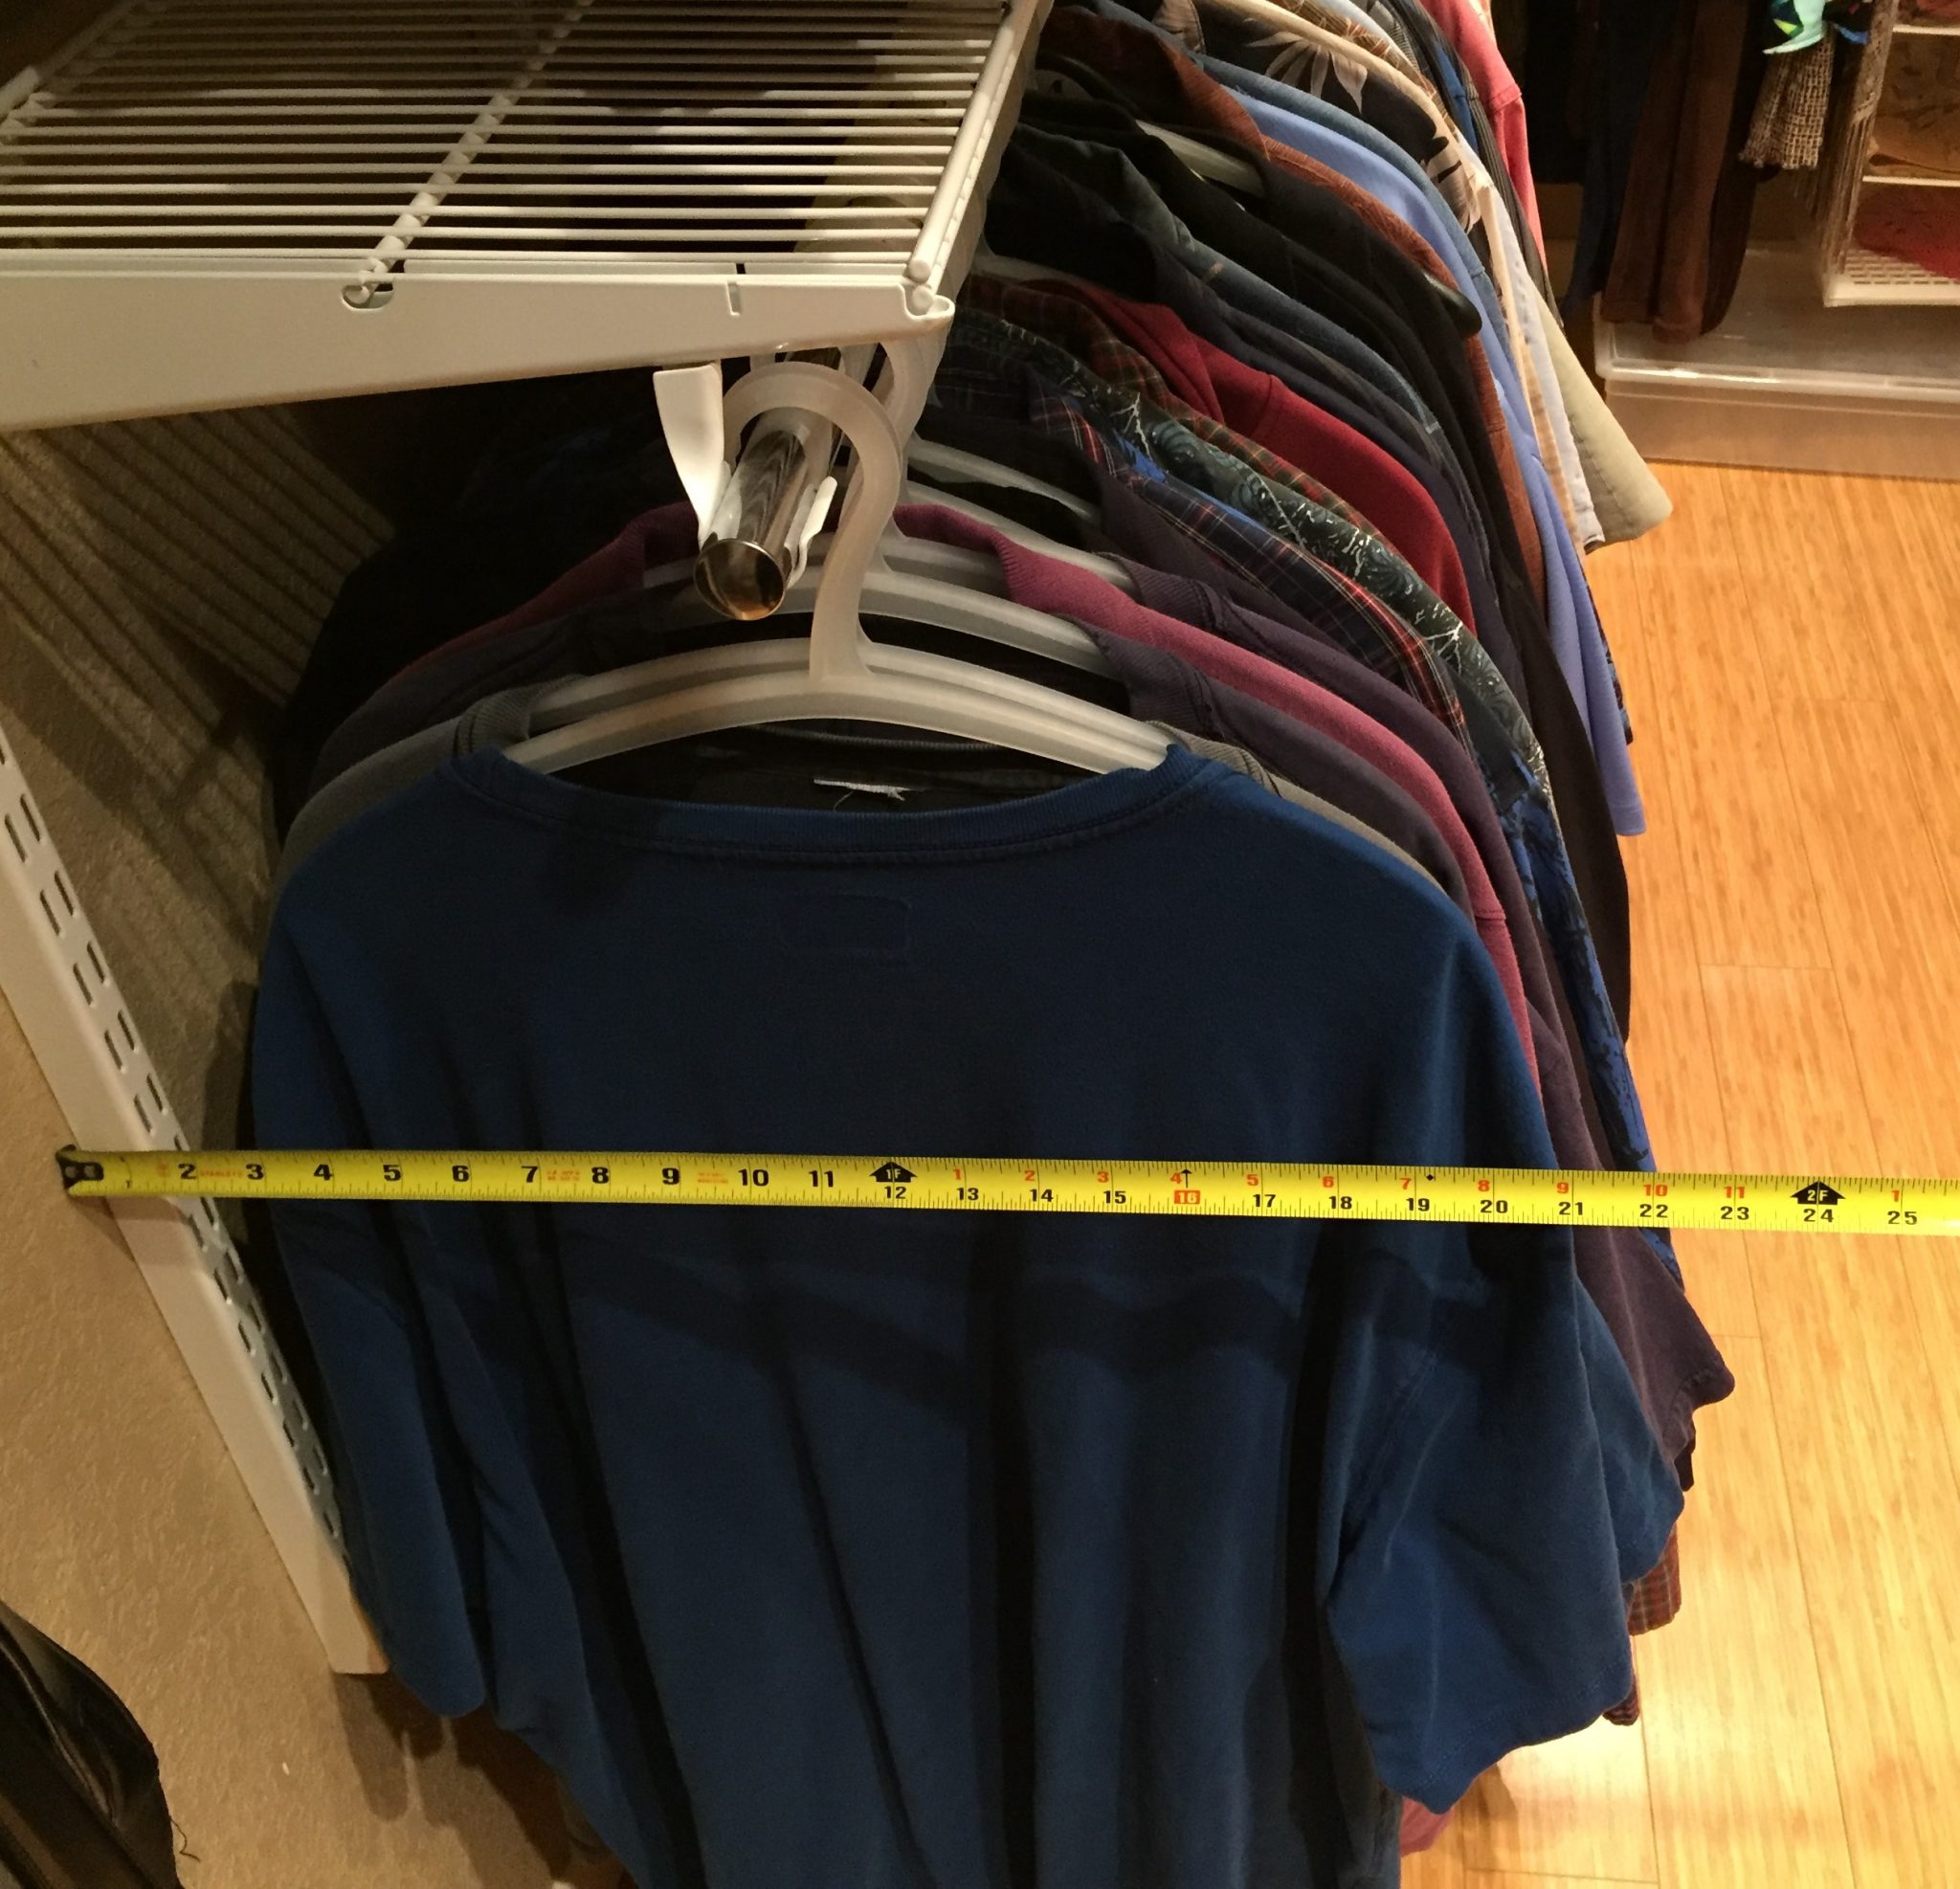 https://www.ajonesfororganizing.com/wp-content/uploads/2018/09/clothes-need-21-24-inches.jpg